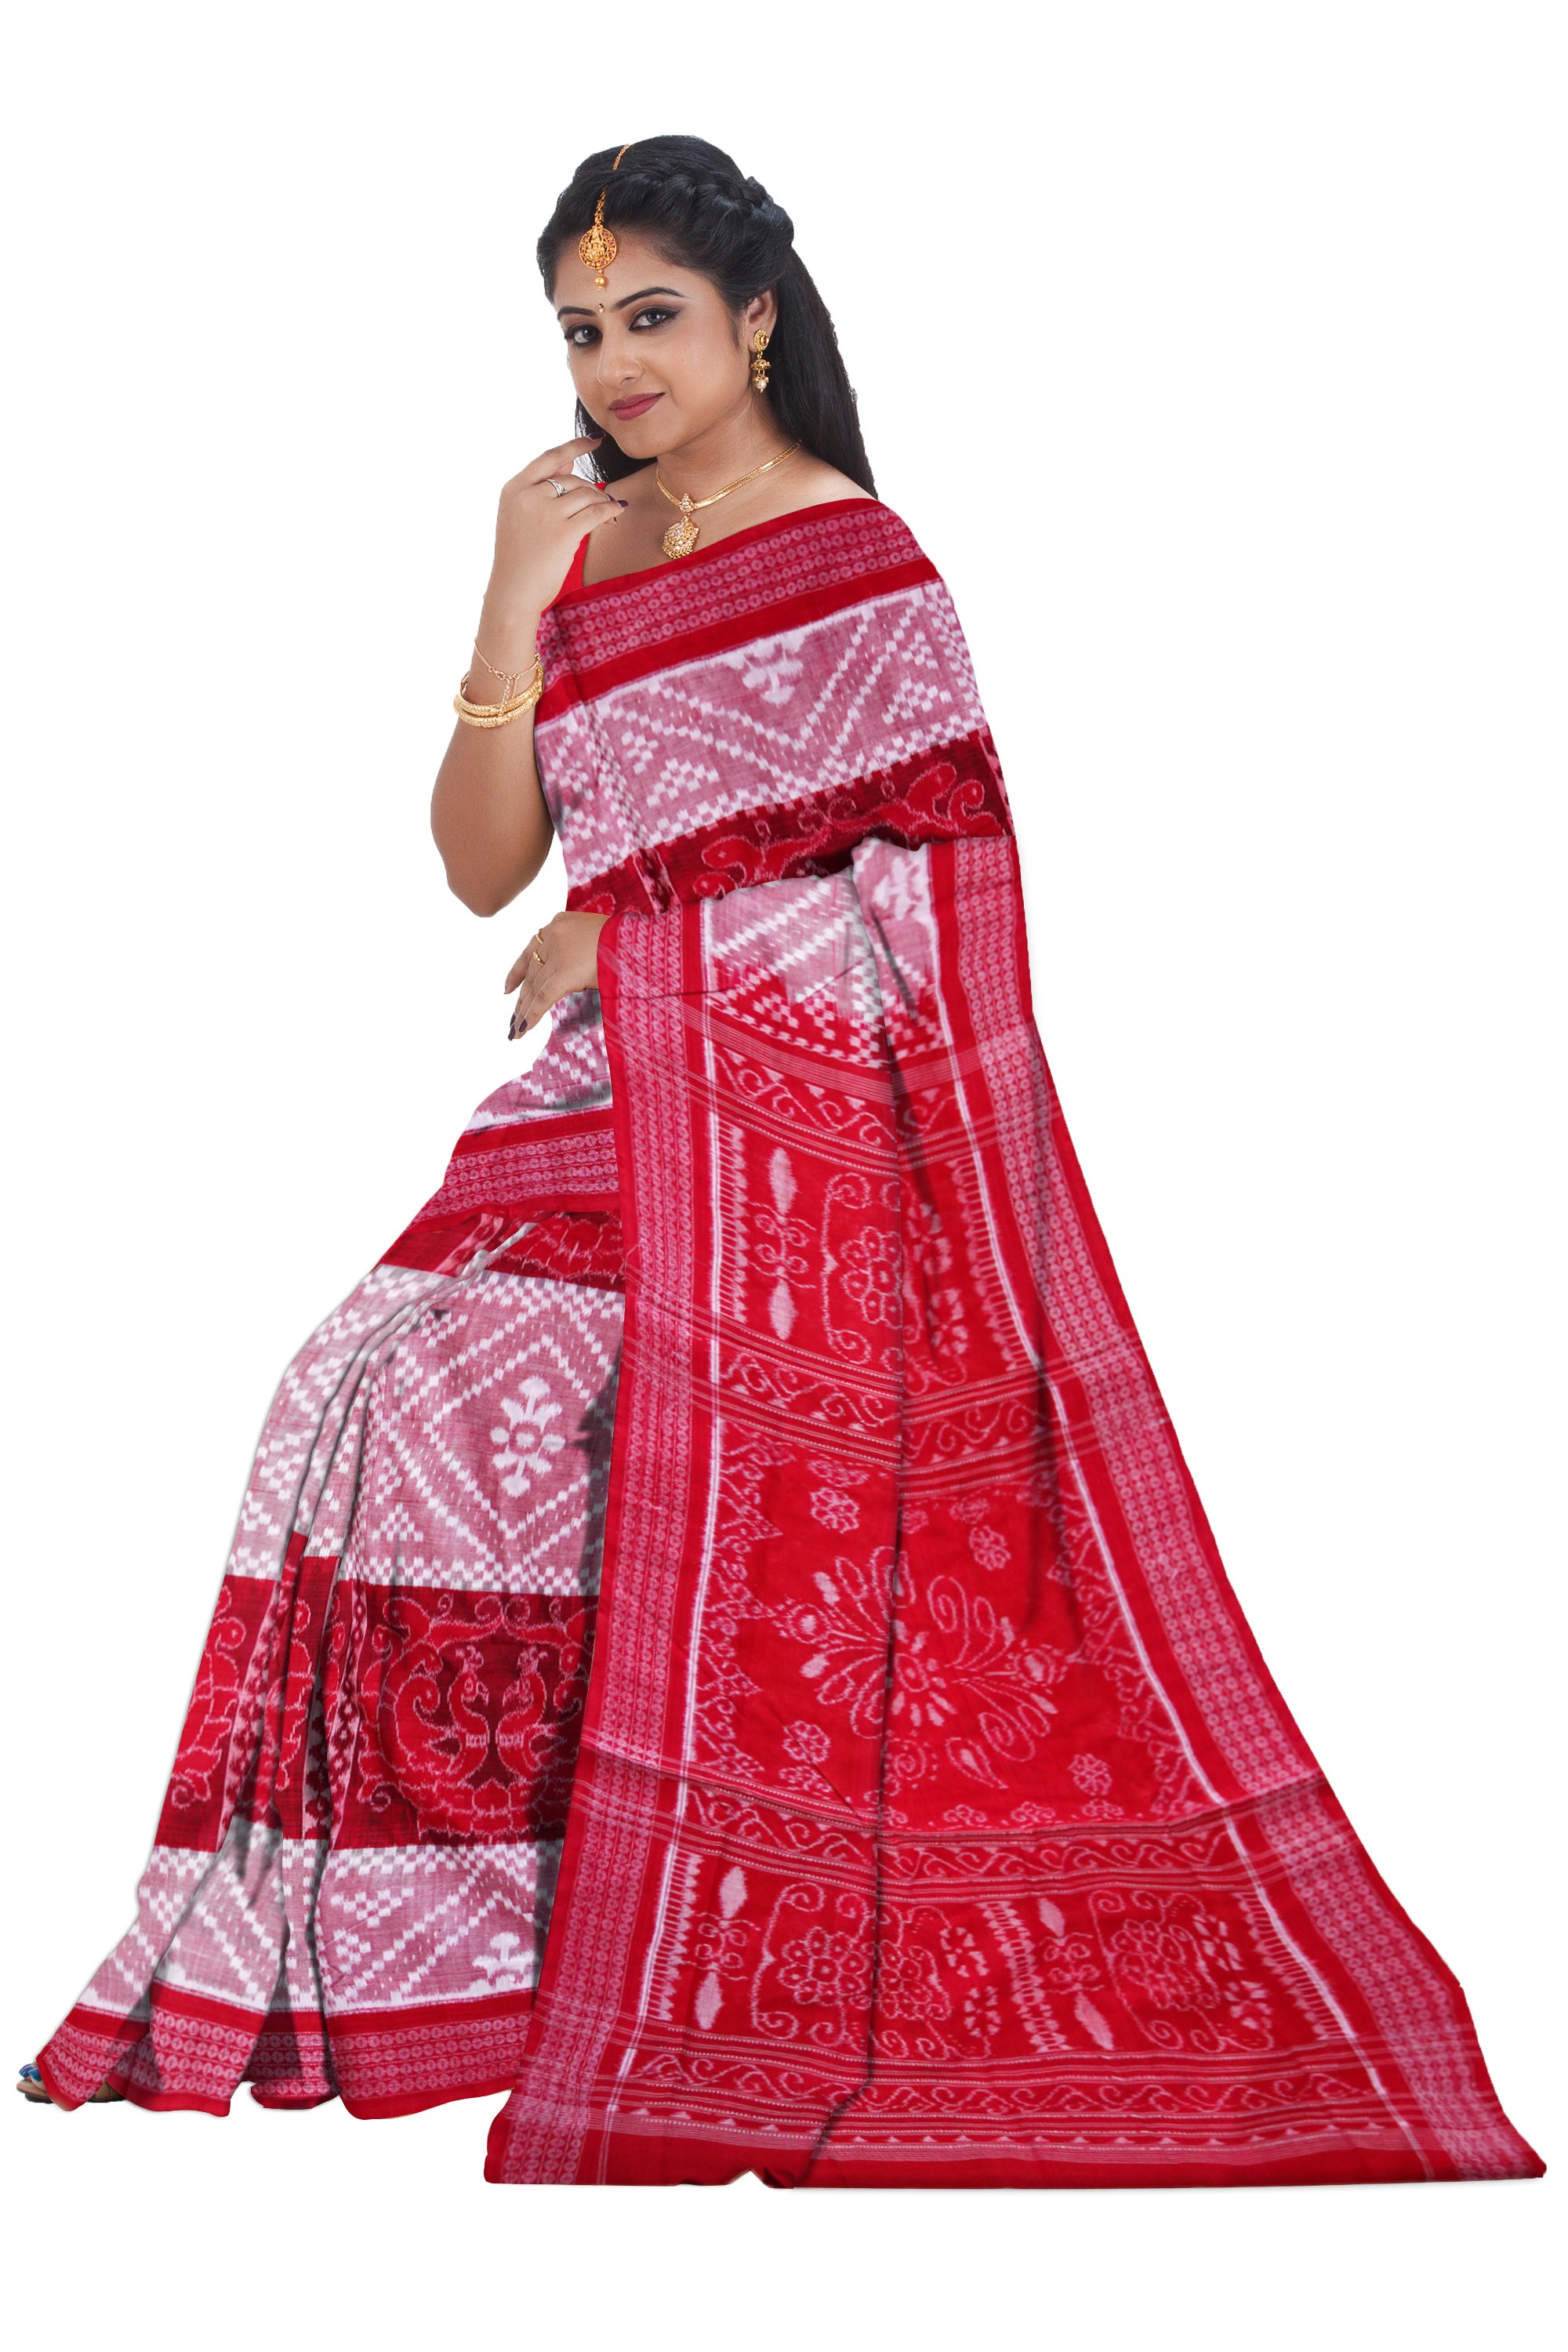 Peacock and small pasapali pattern Sambalpuri cotton saree is white and red color. - Koshali Arts & Crafts Enterprise